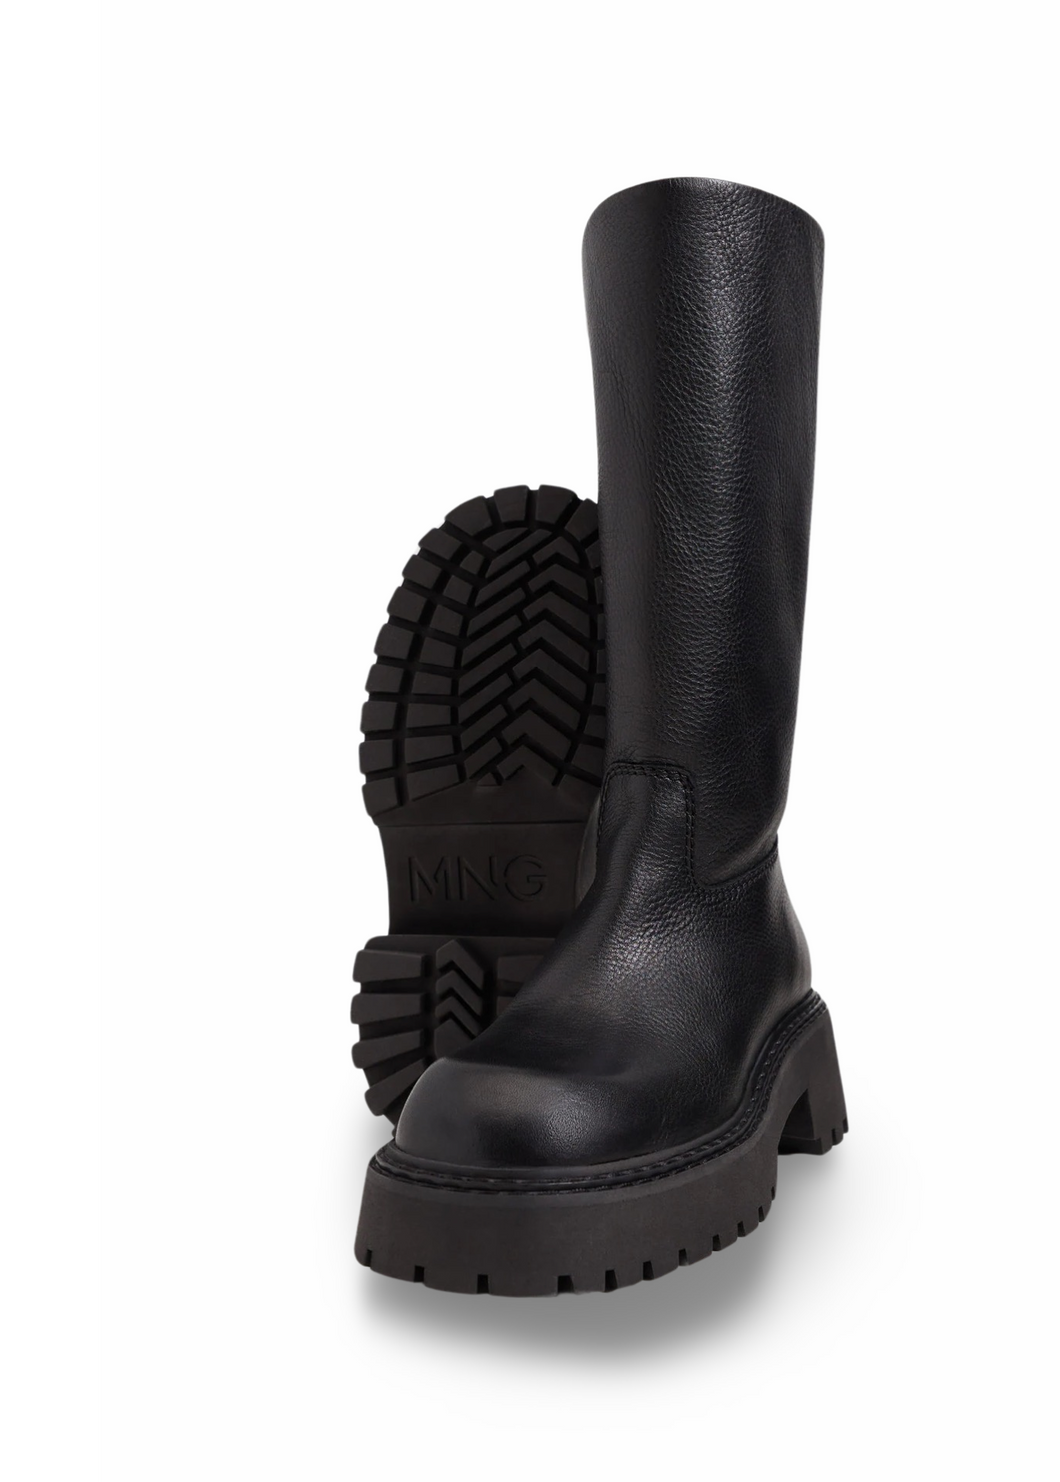 Mango Tall Black Leather Boots UK5 EU38